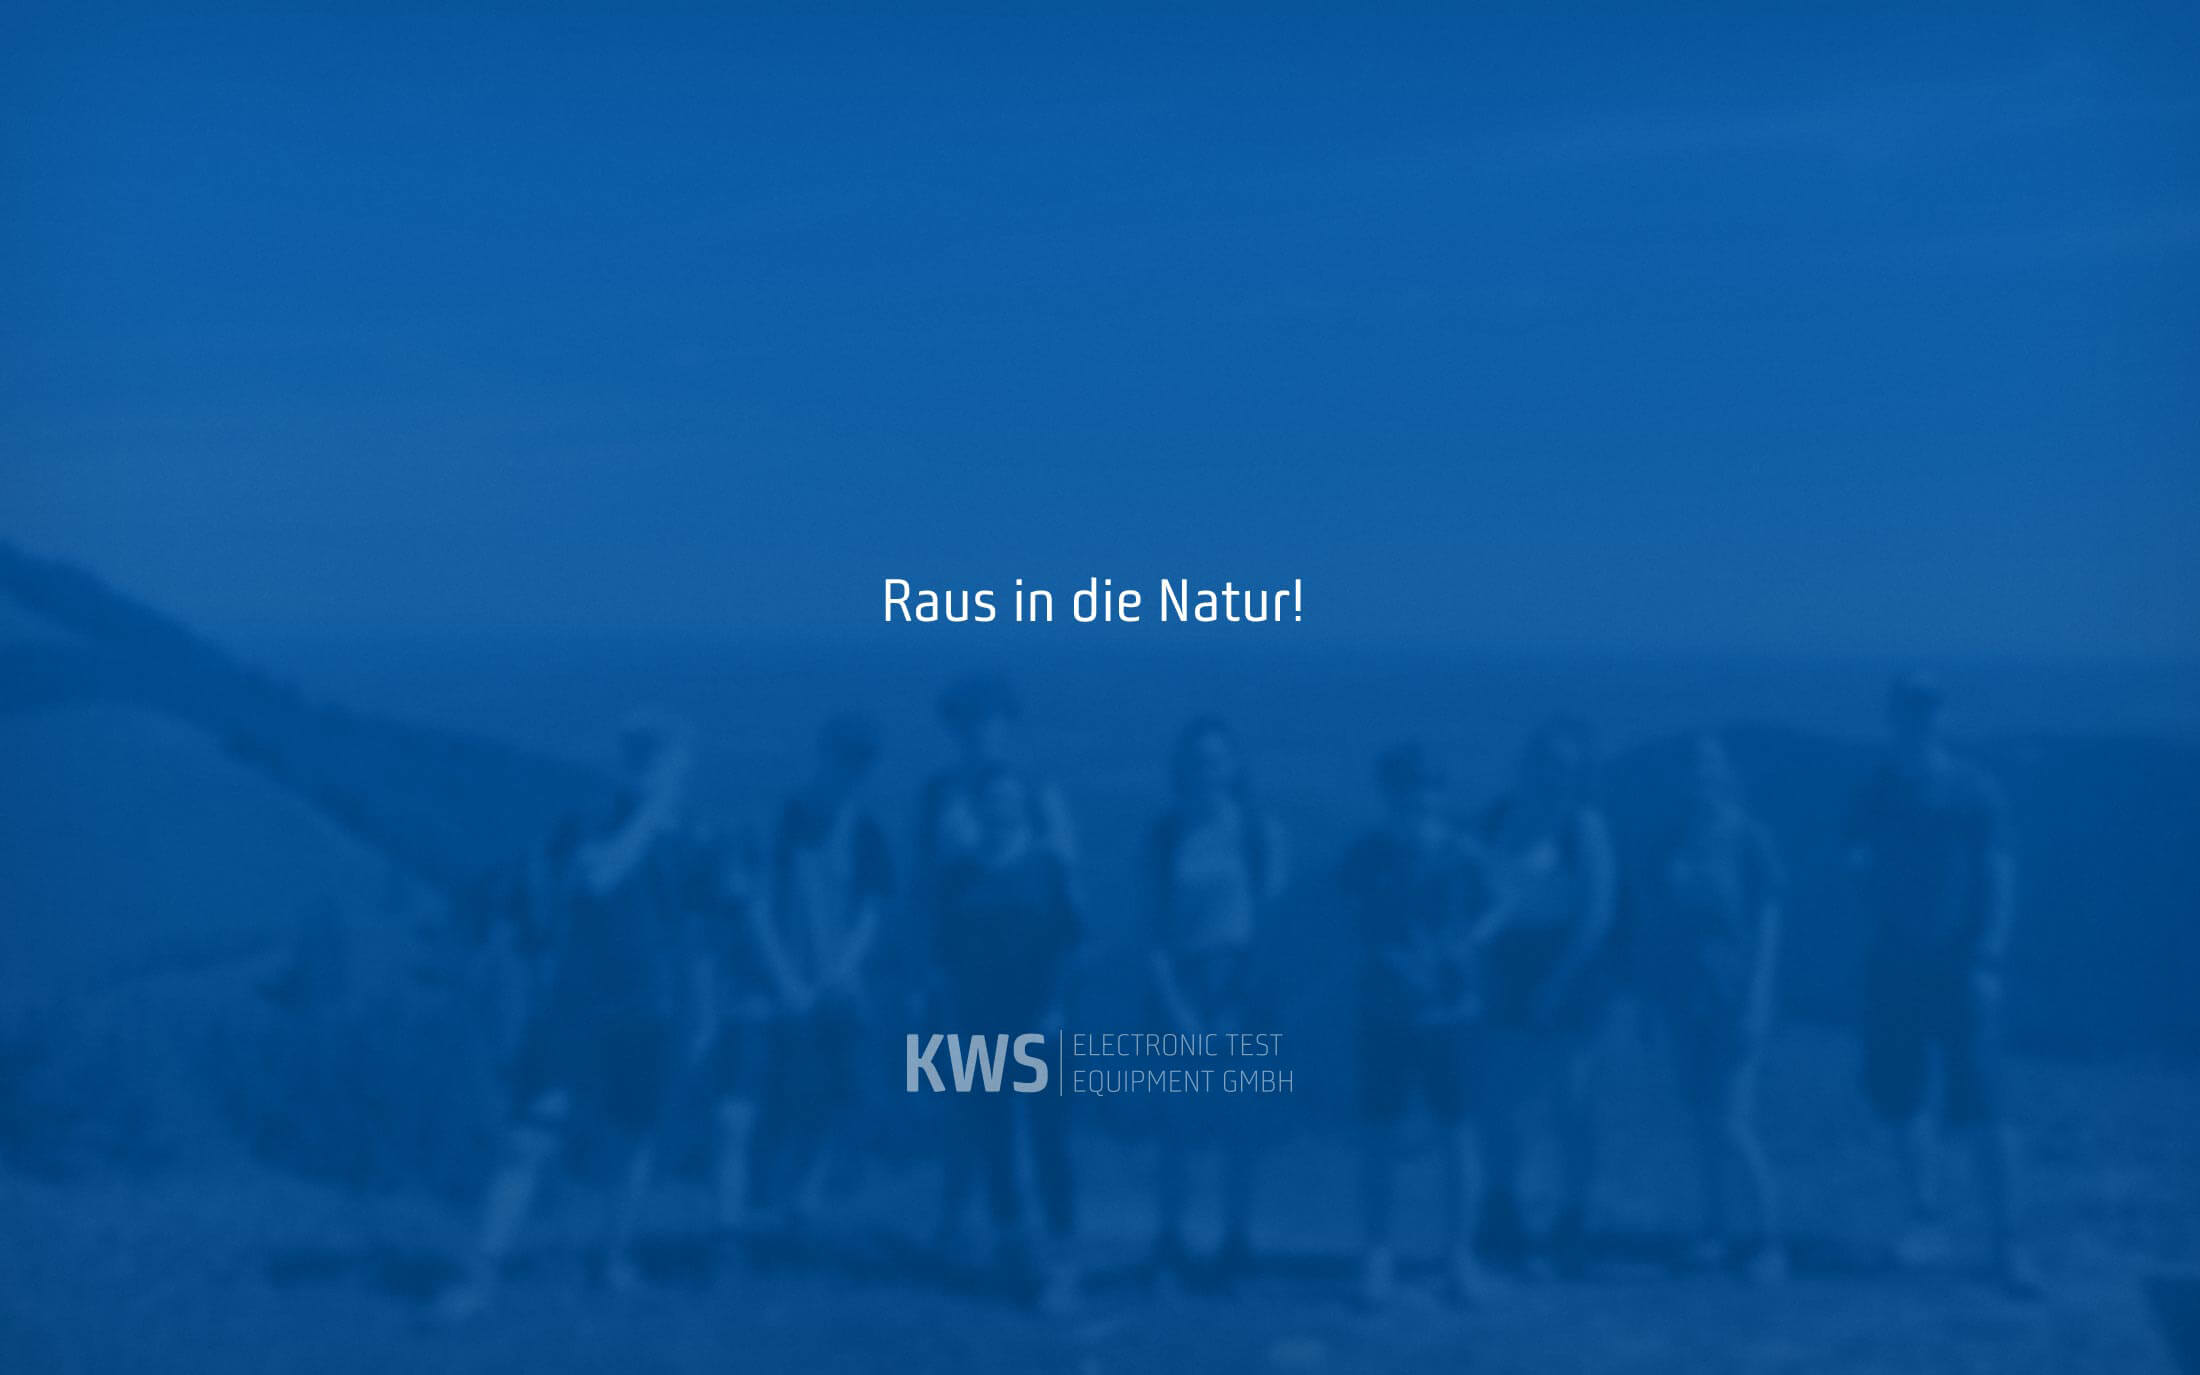 KWS Electronic News 2021: Raus in die Natur